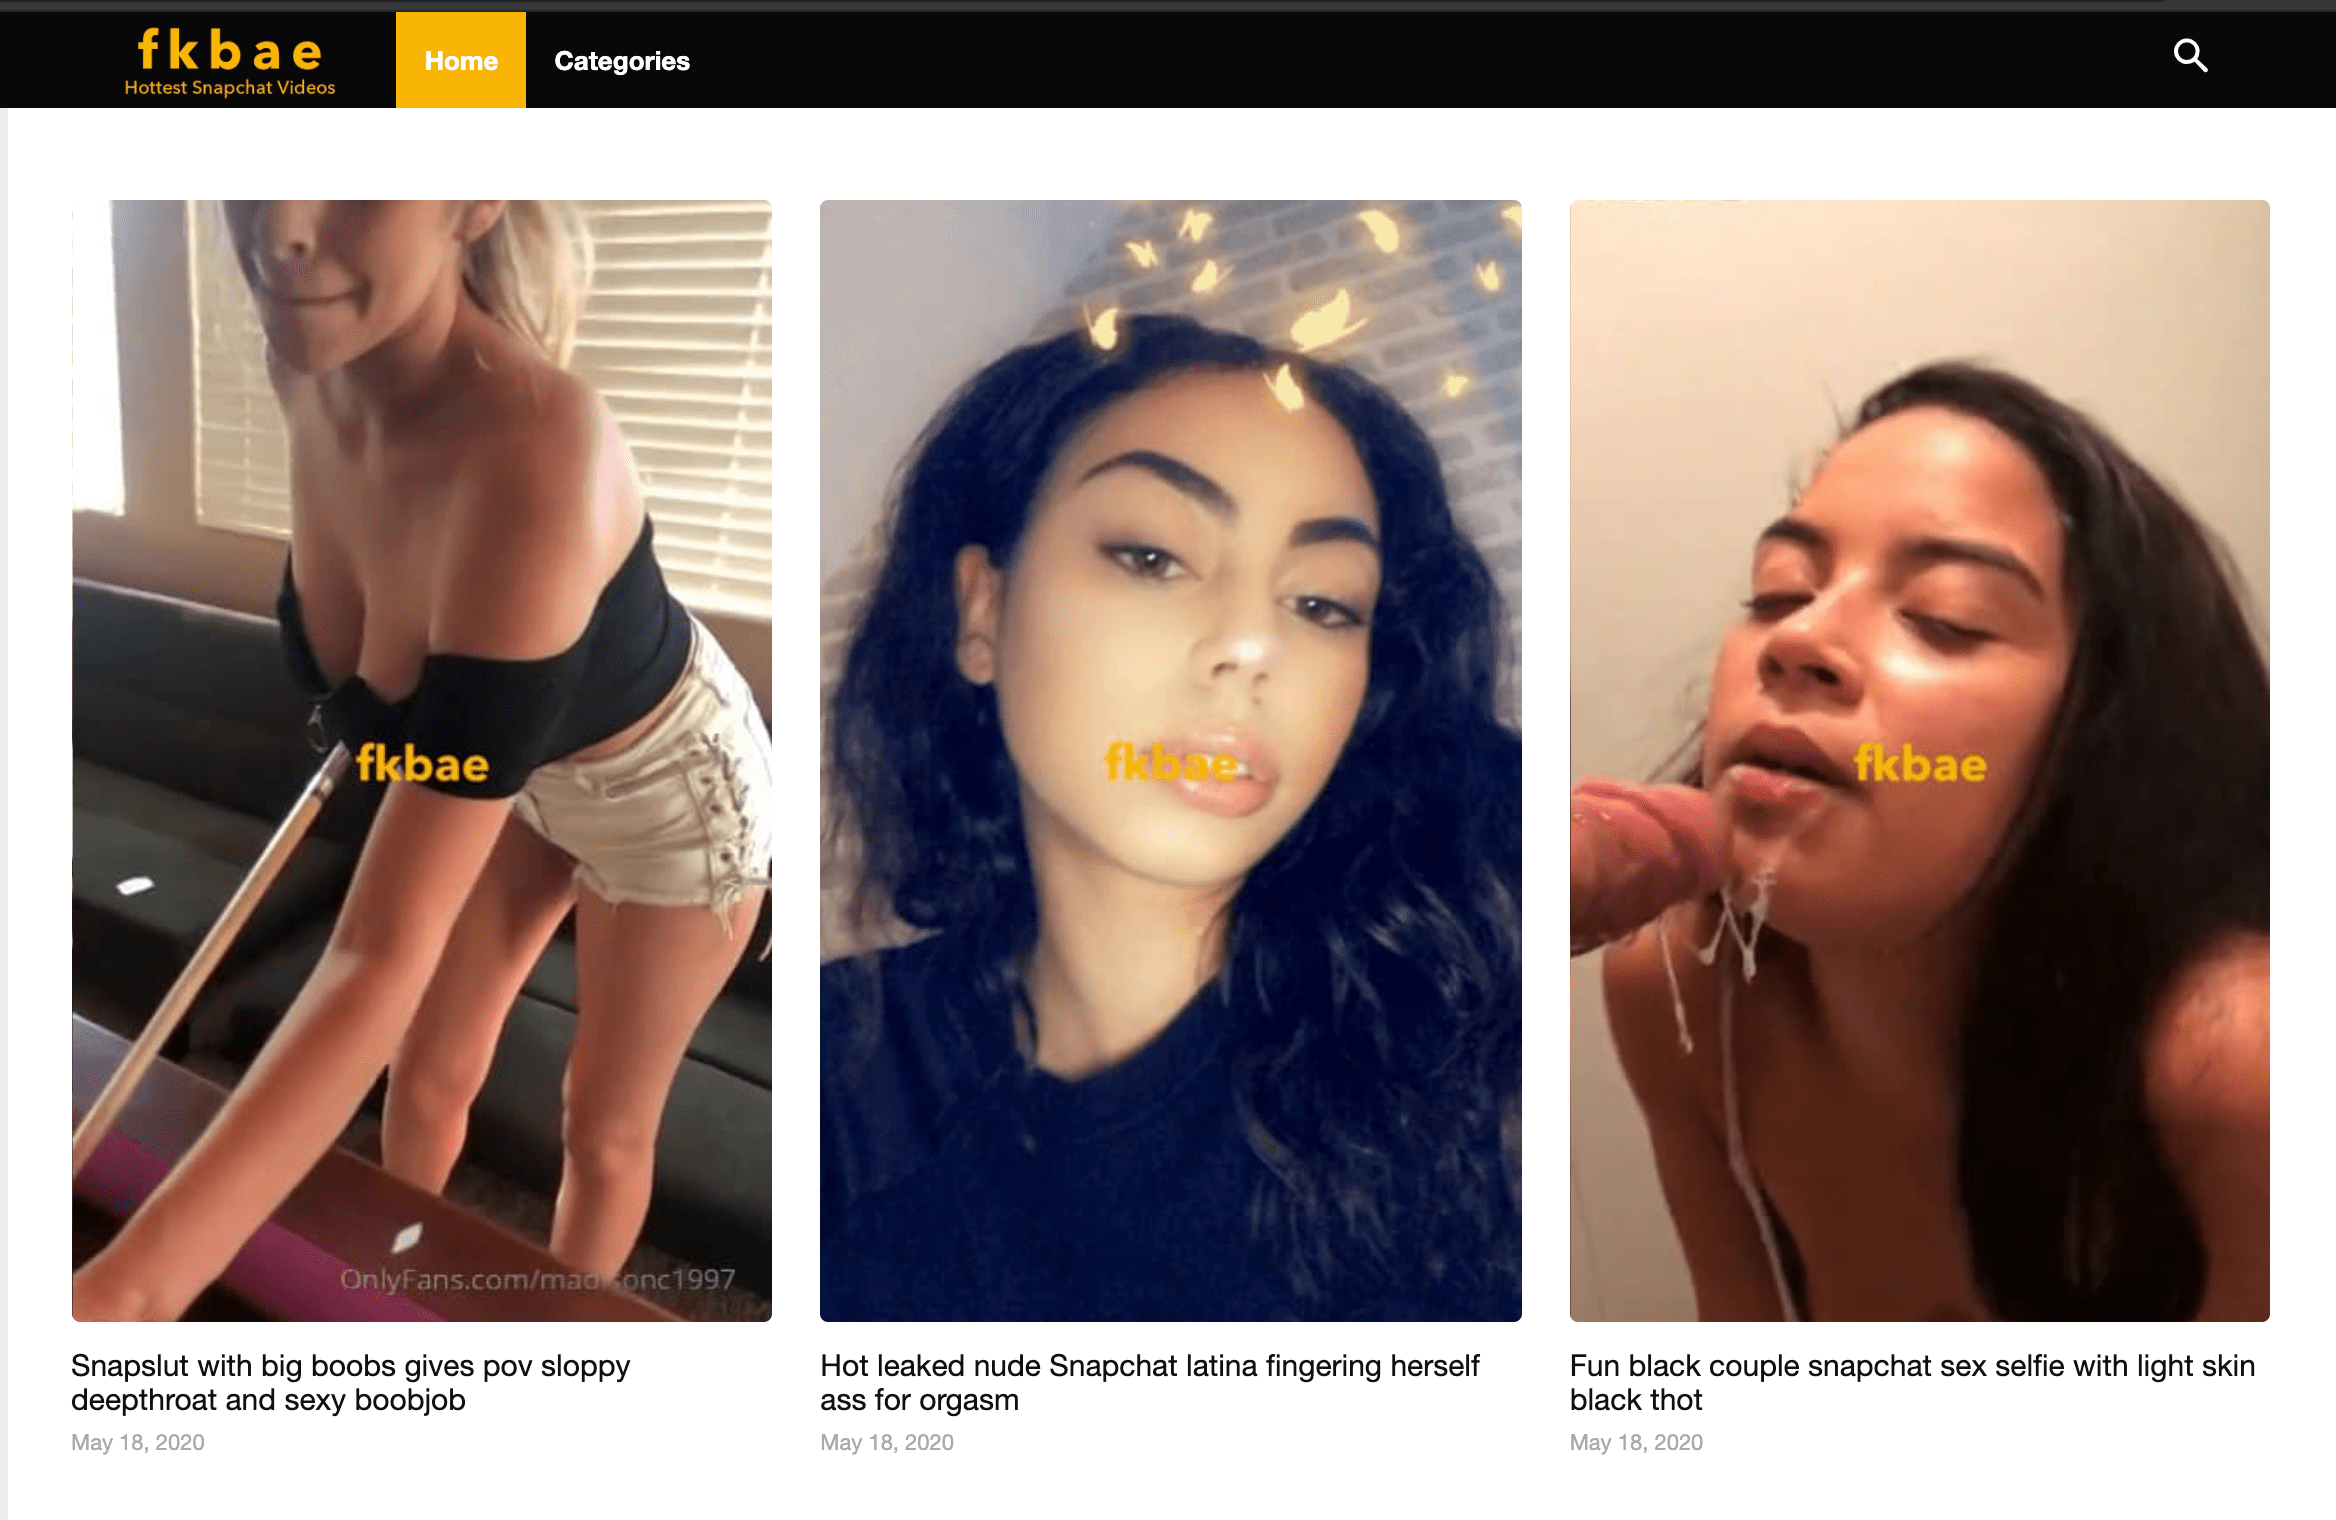 Snapchats that post porn